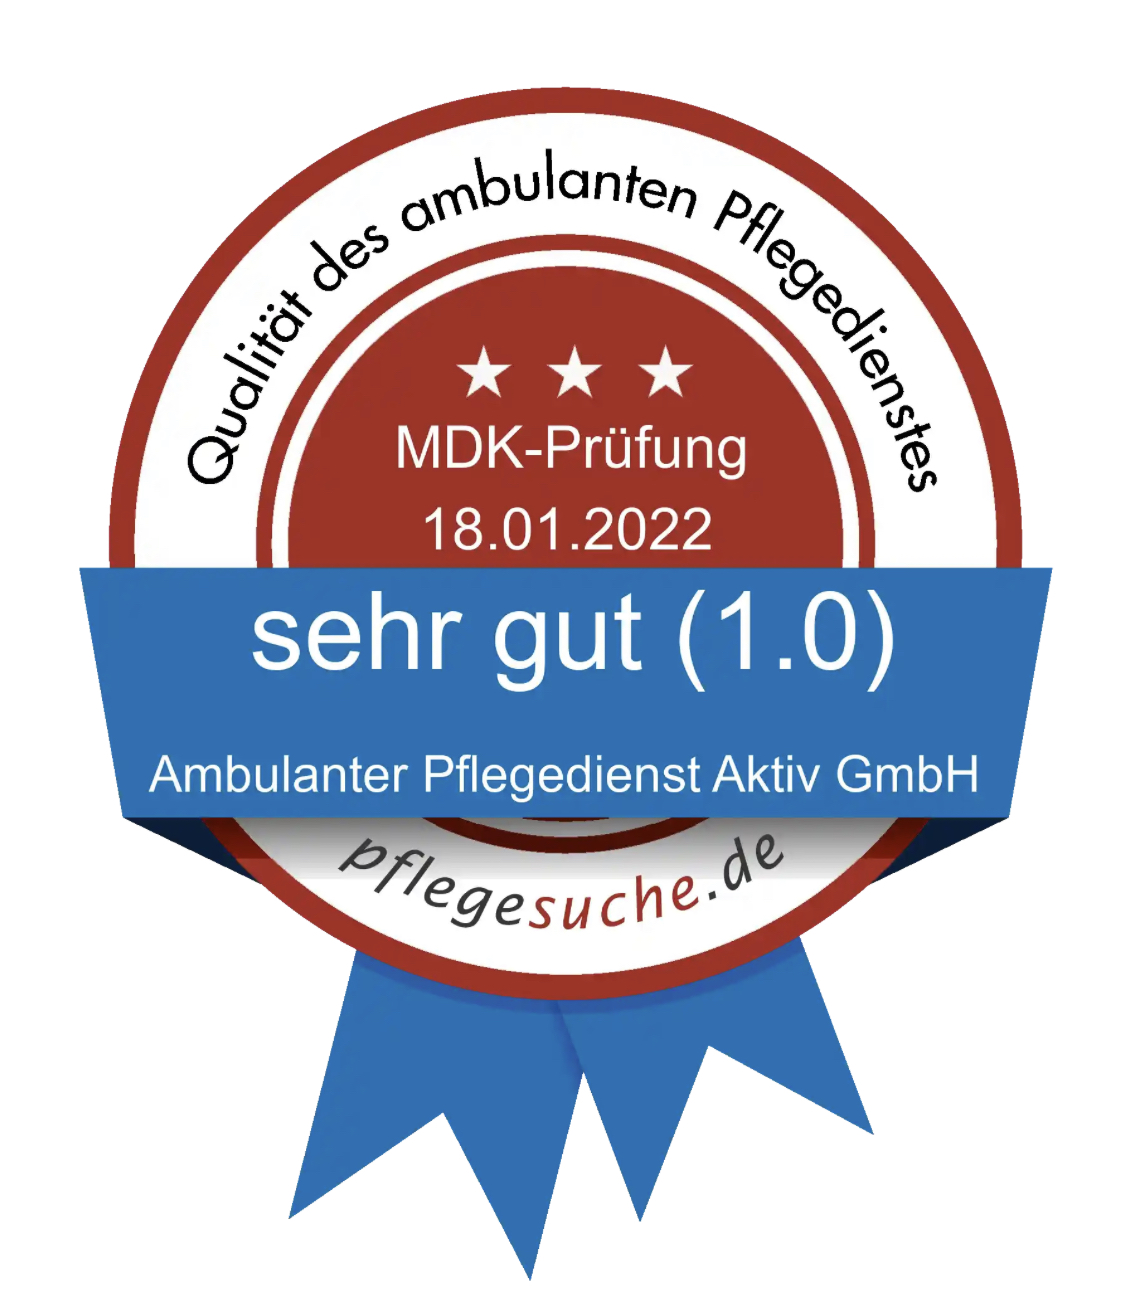 Ambulanter Pflegedienst Aktiv GmbH